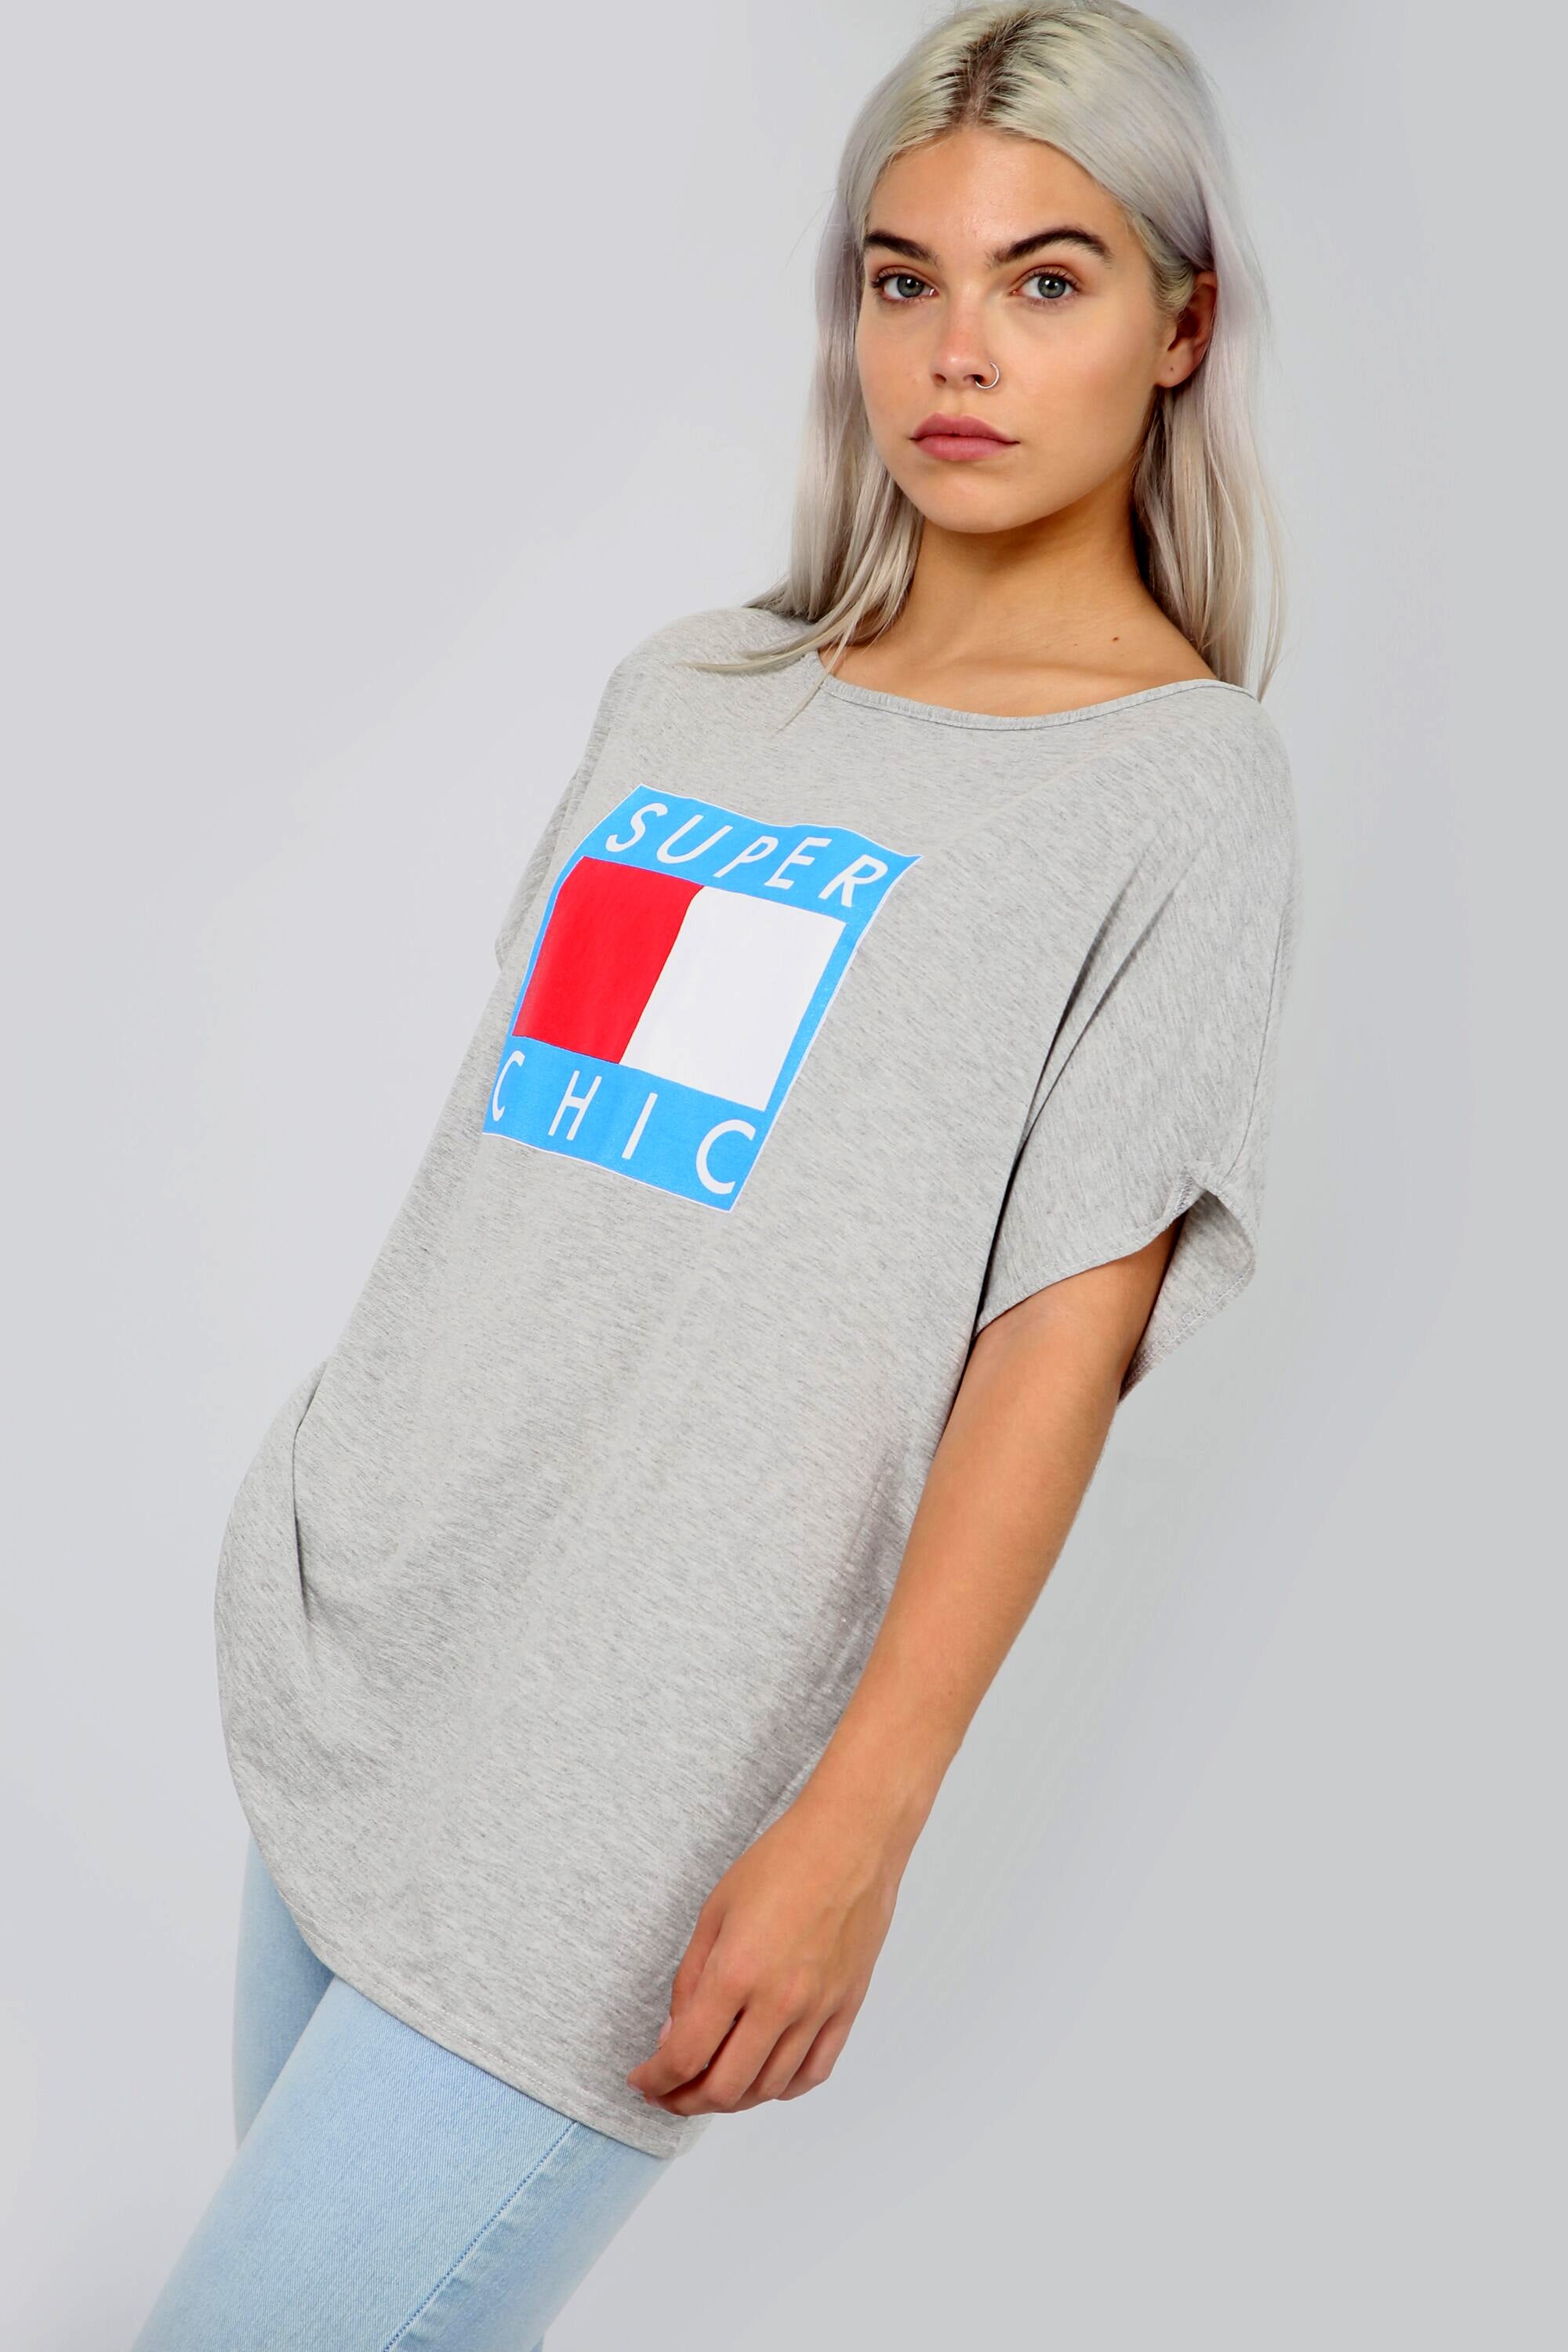 Super Chic Slogan Print Oversize Basic Tshirt - bejealous-com